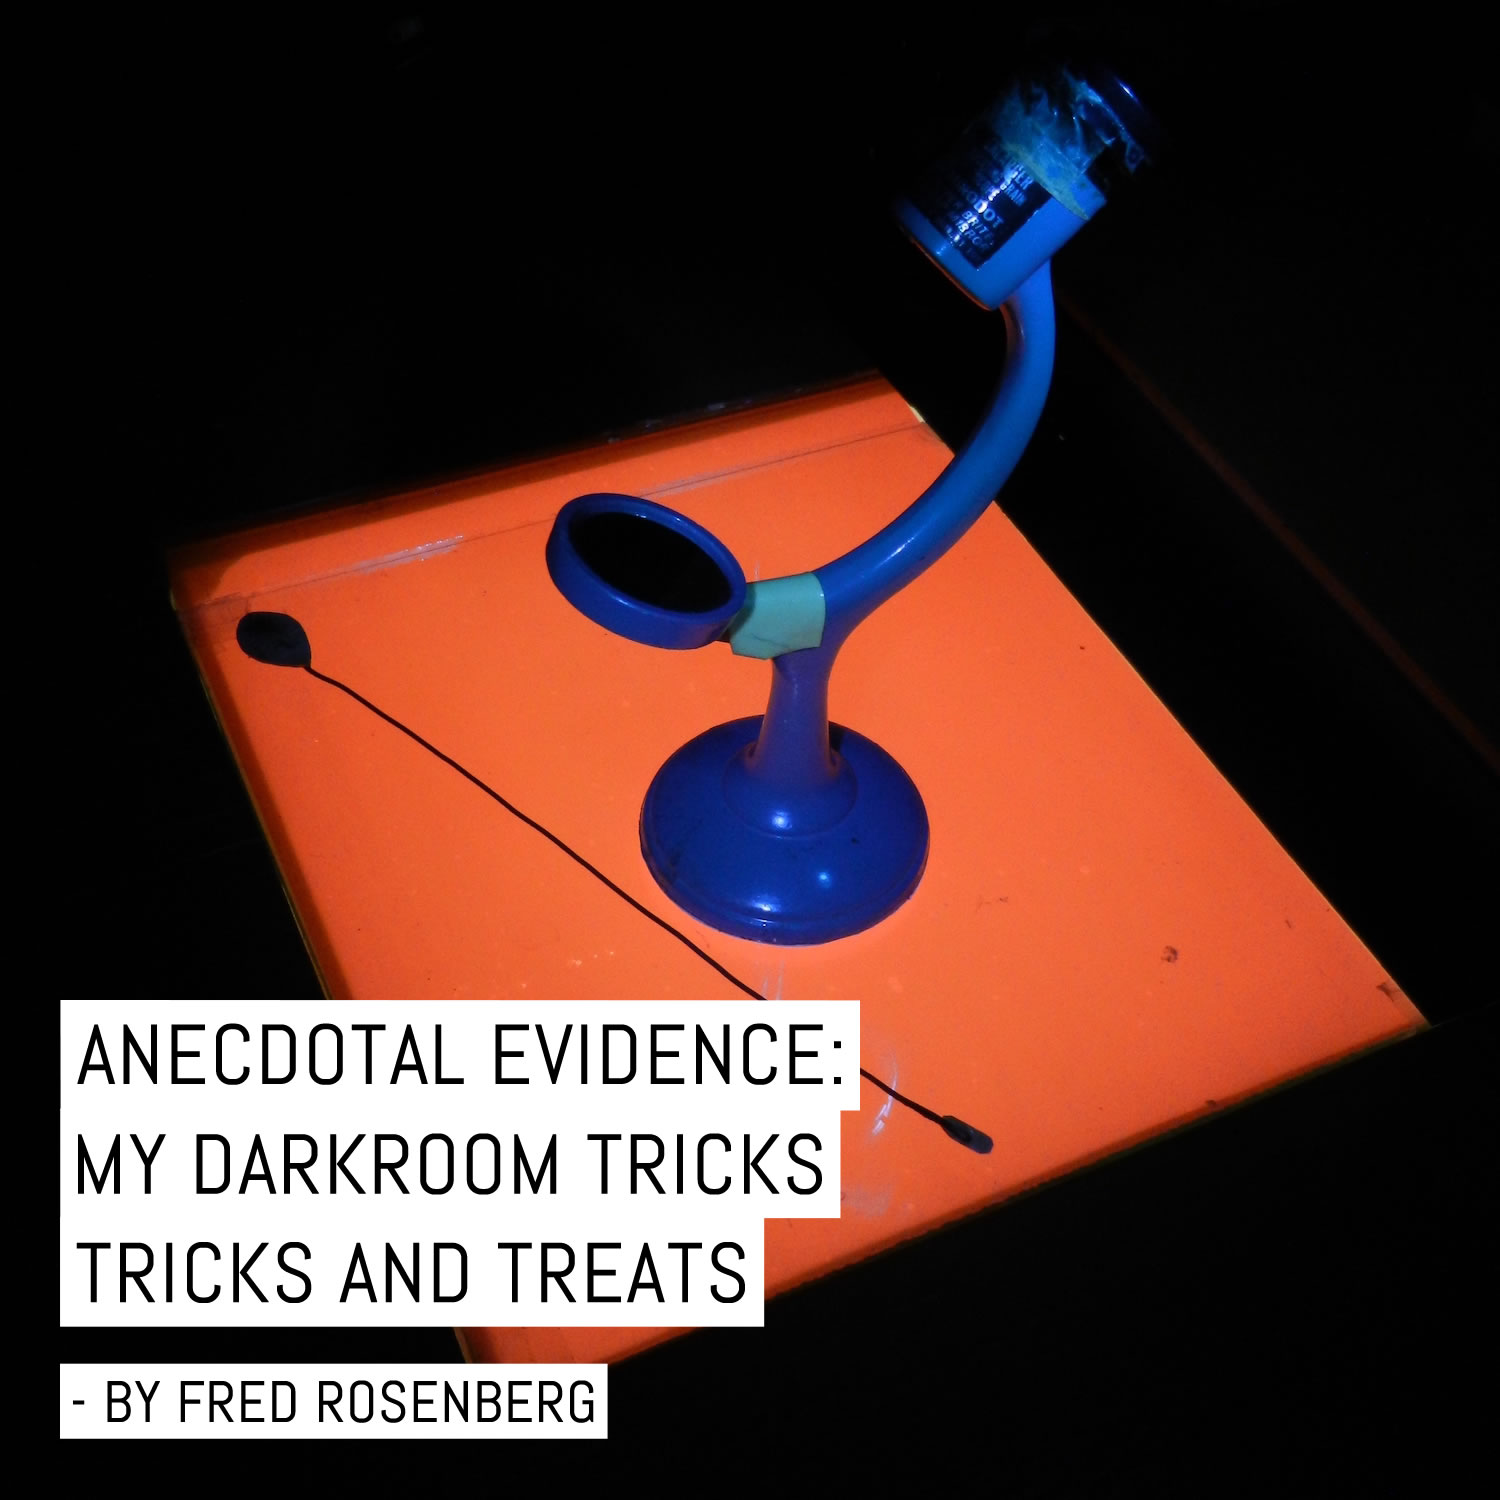 Anecdotal evidence: My darkroom tricks and treats